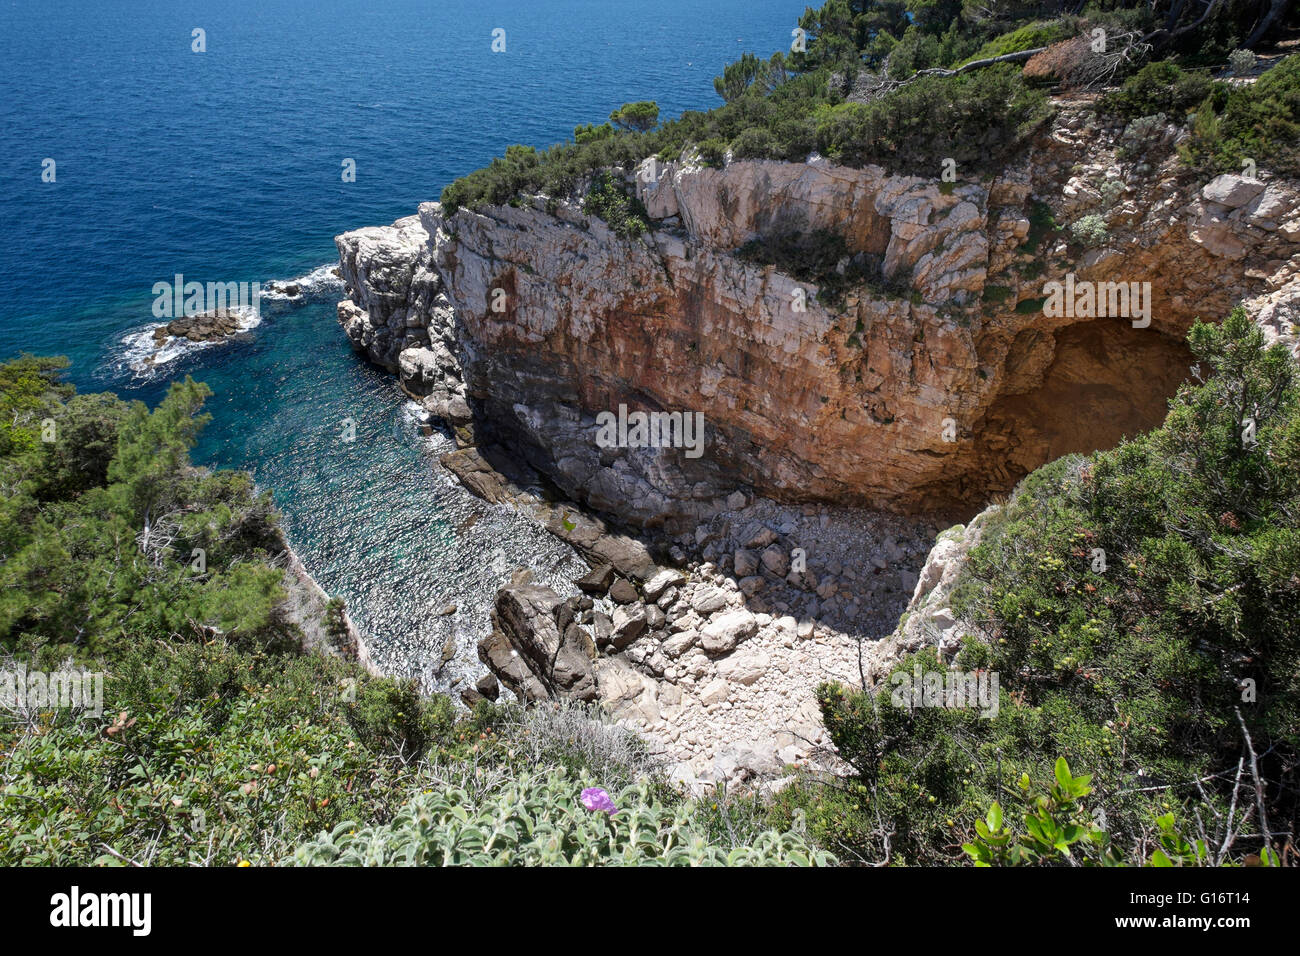 A sea cave on the UNESCO nature reserve Island of Lokrum, Dubrovnik, Croatia Stock Photo